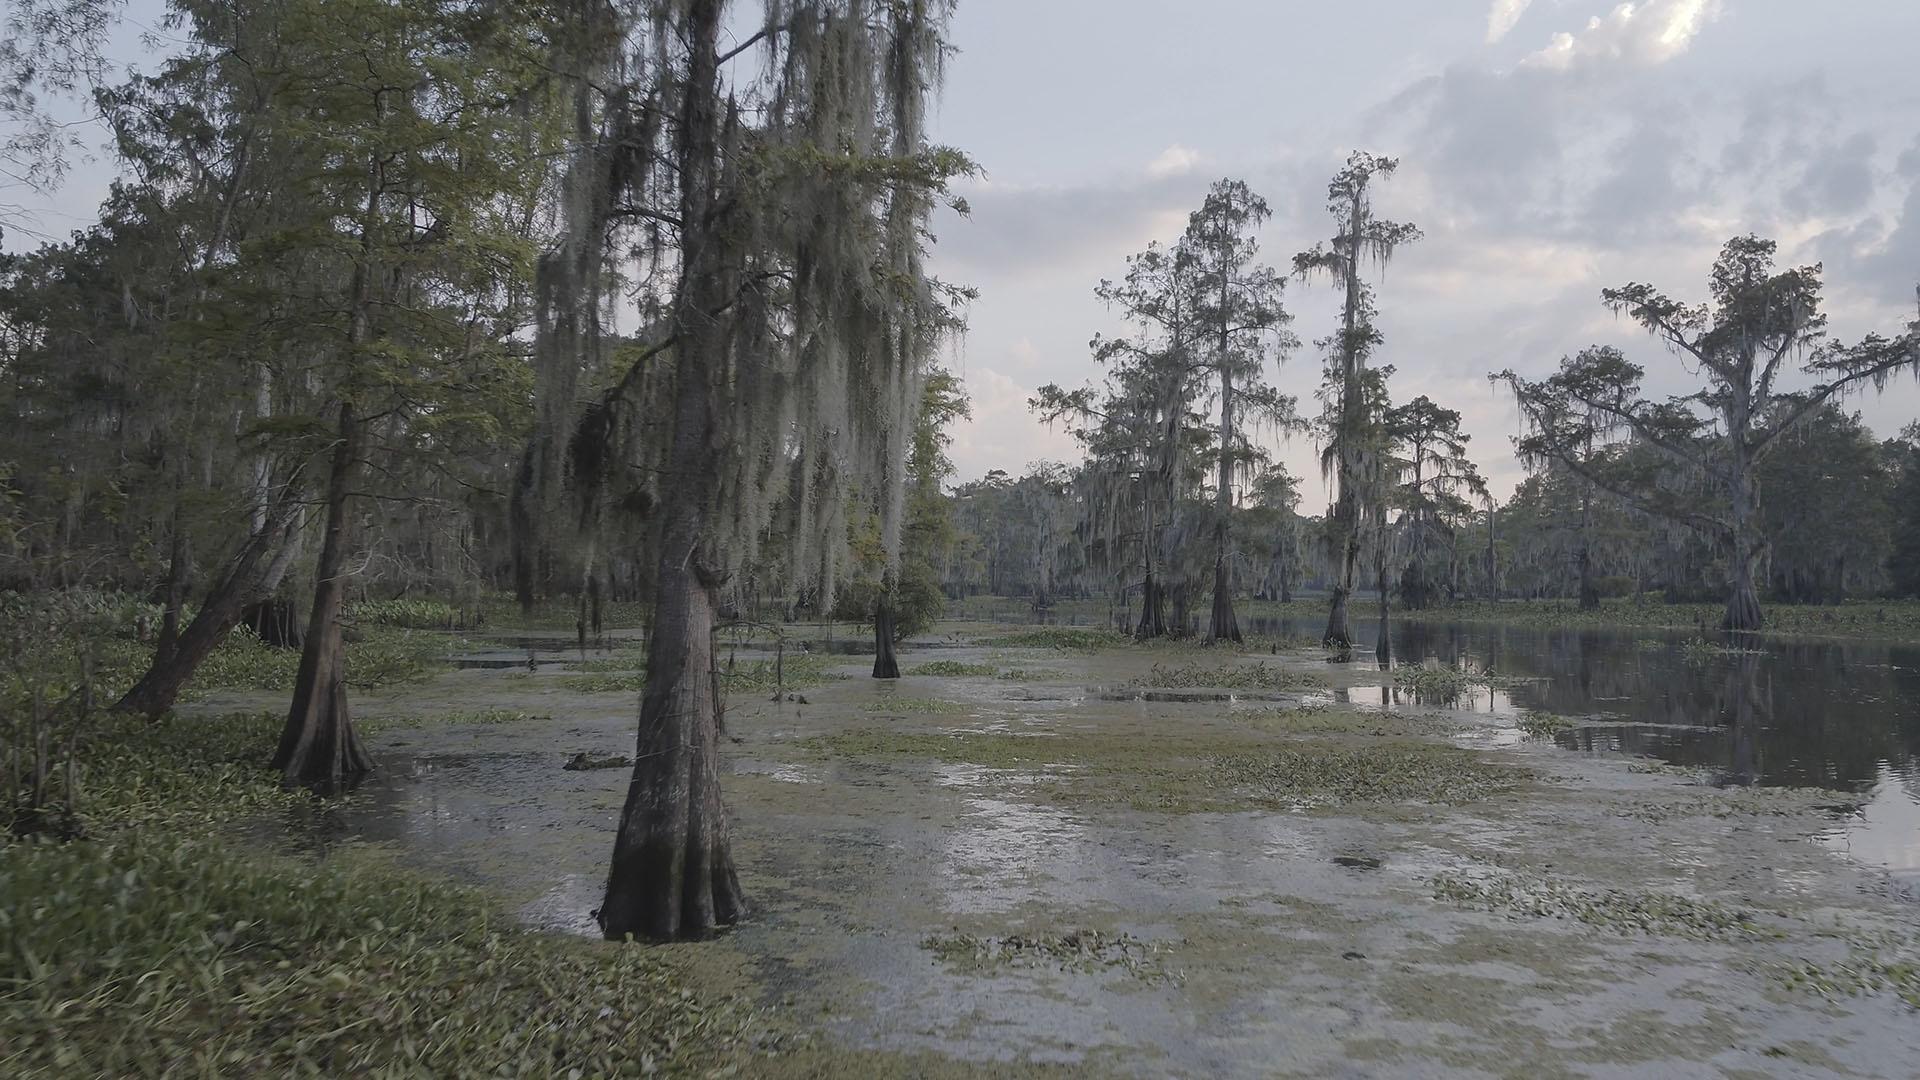 The Atchafalaya Swamp in Louisiana.